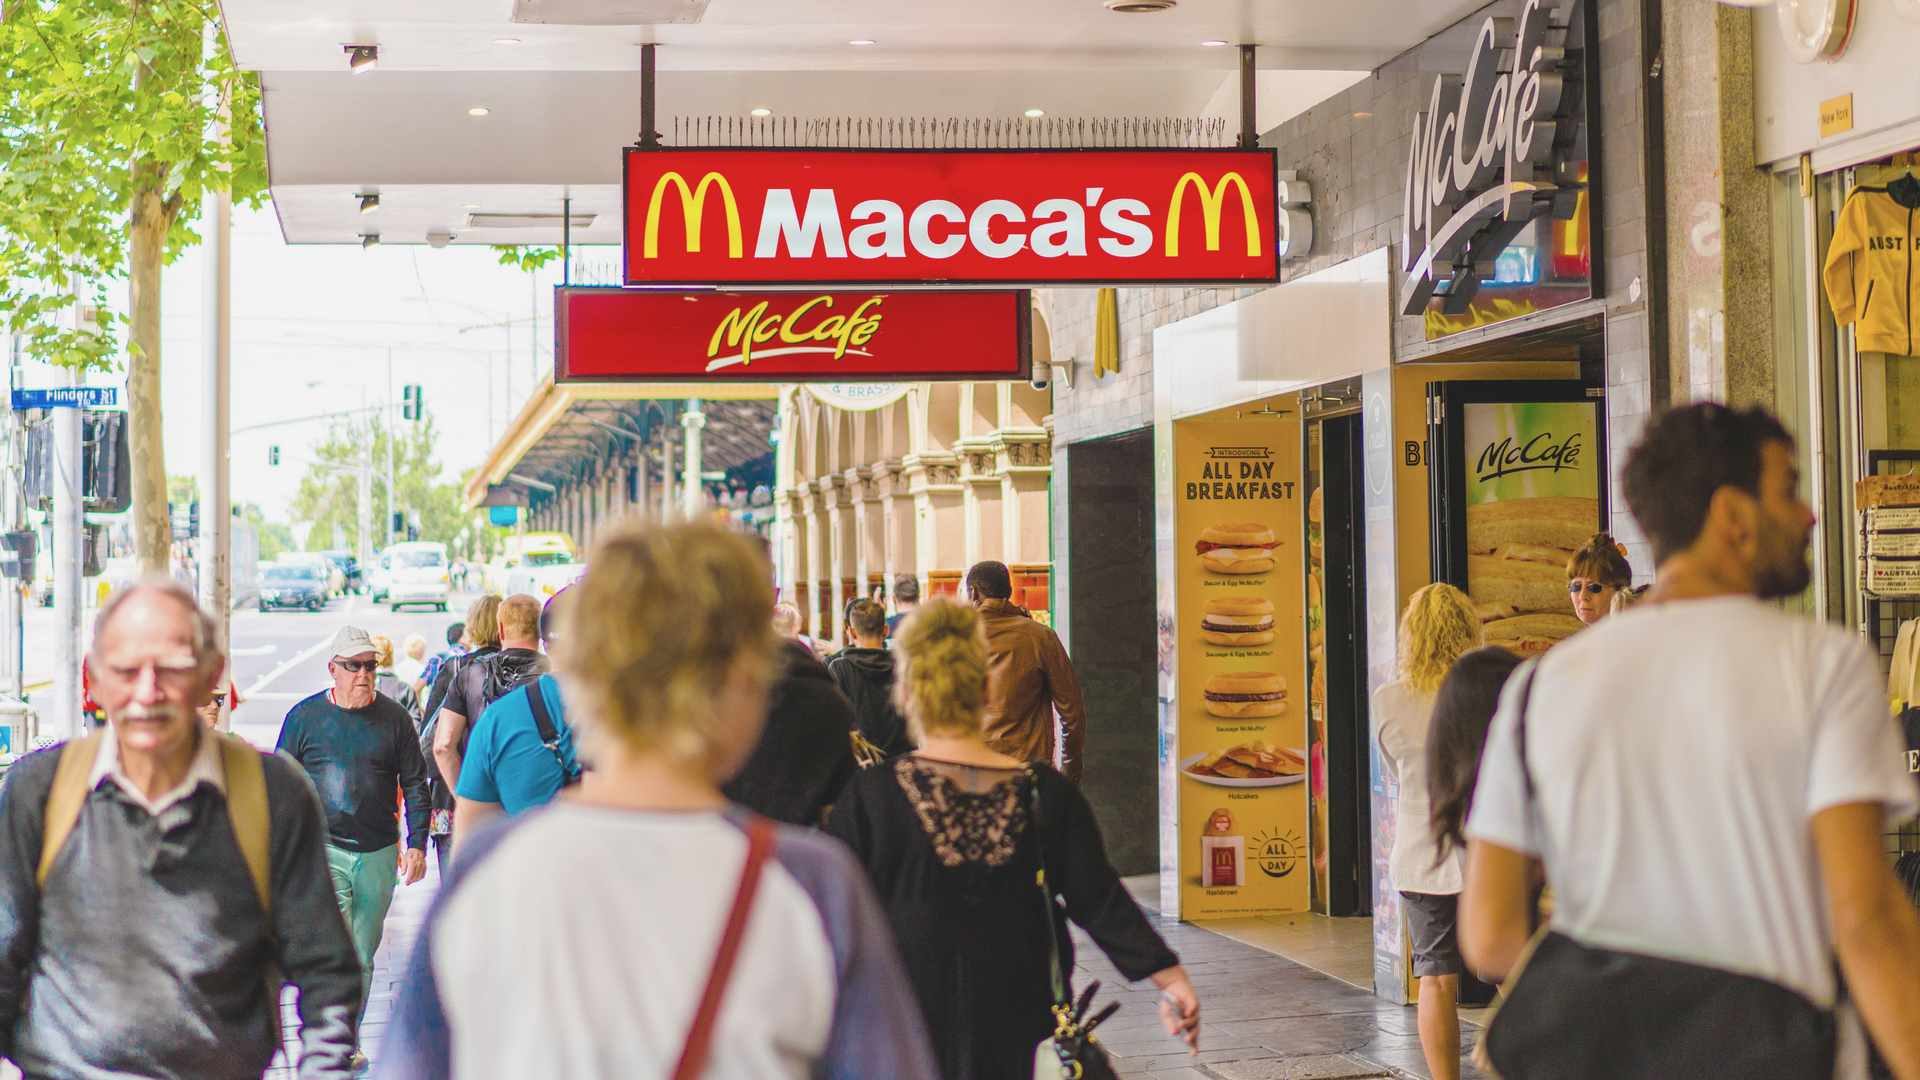 Macca's in Melbourne, Australia